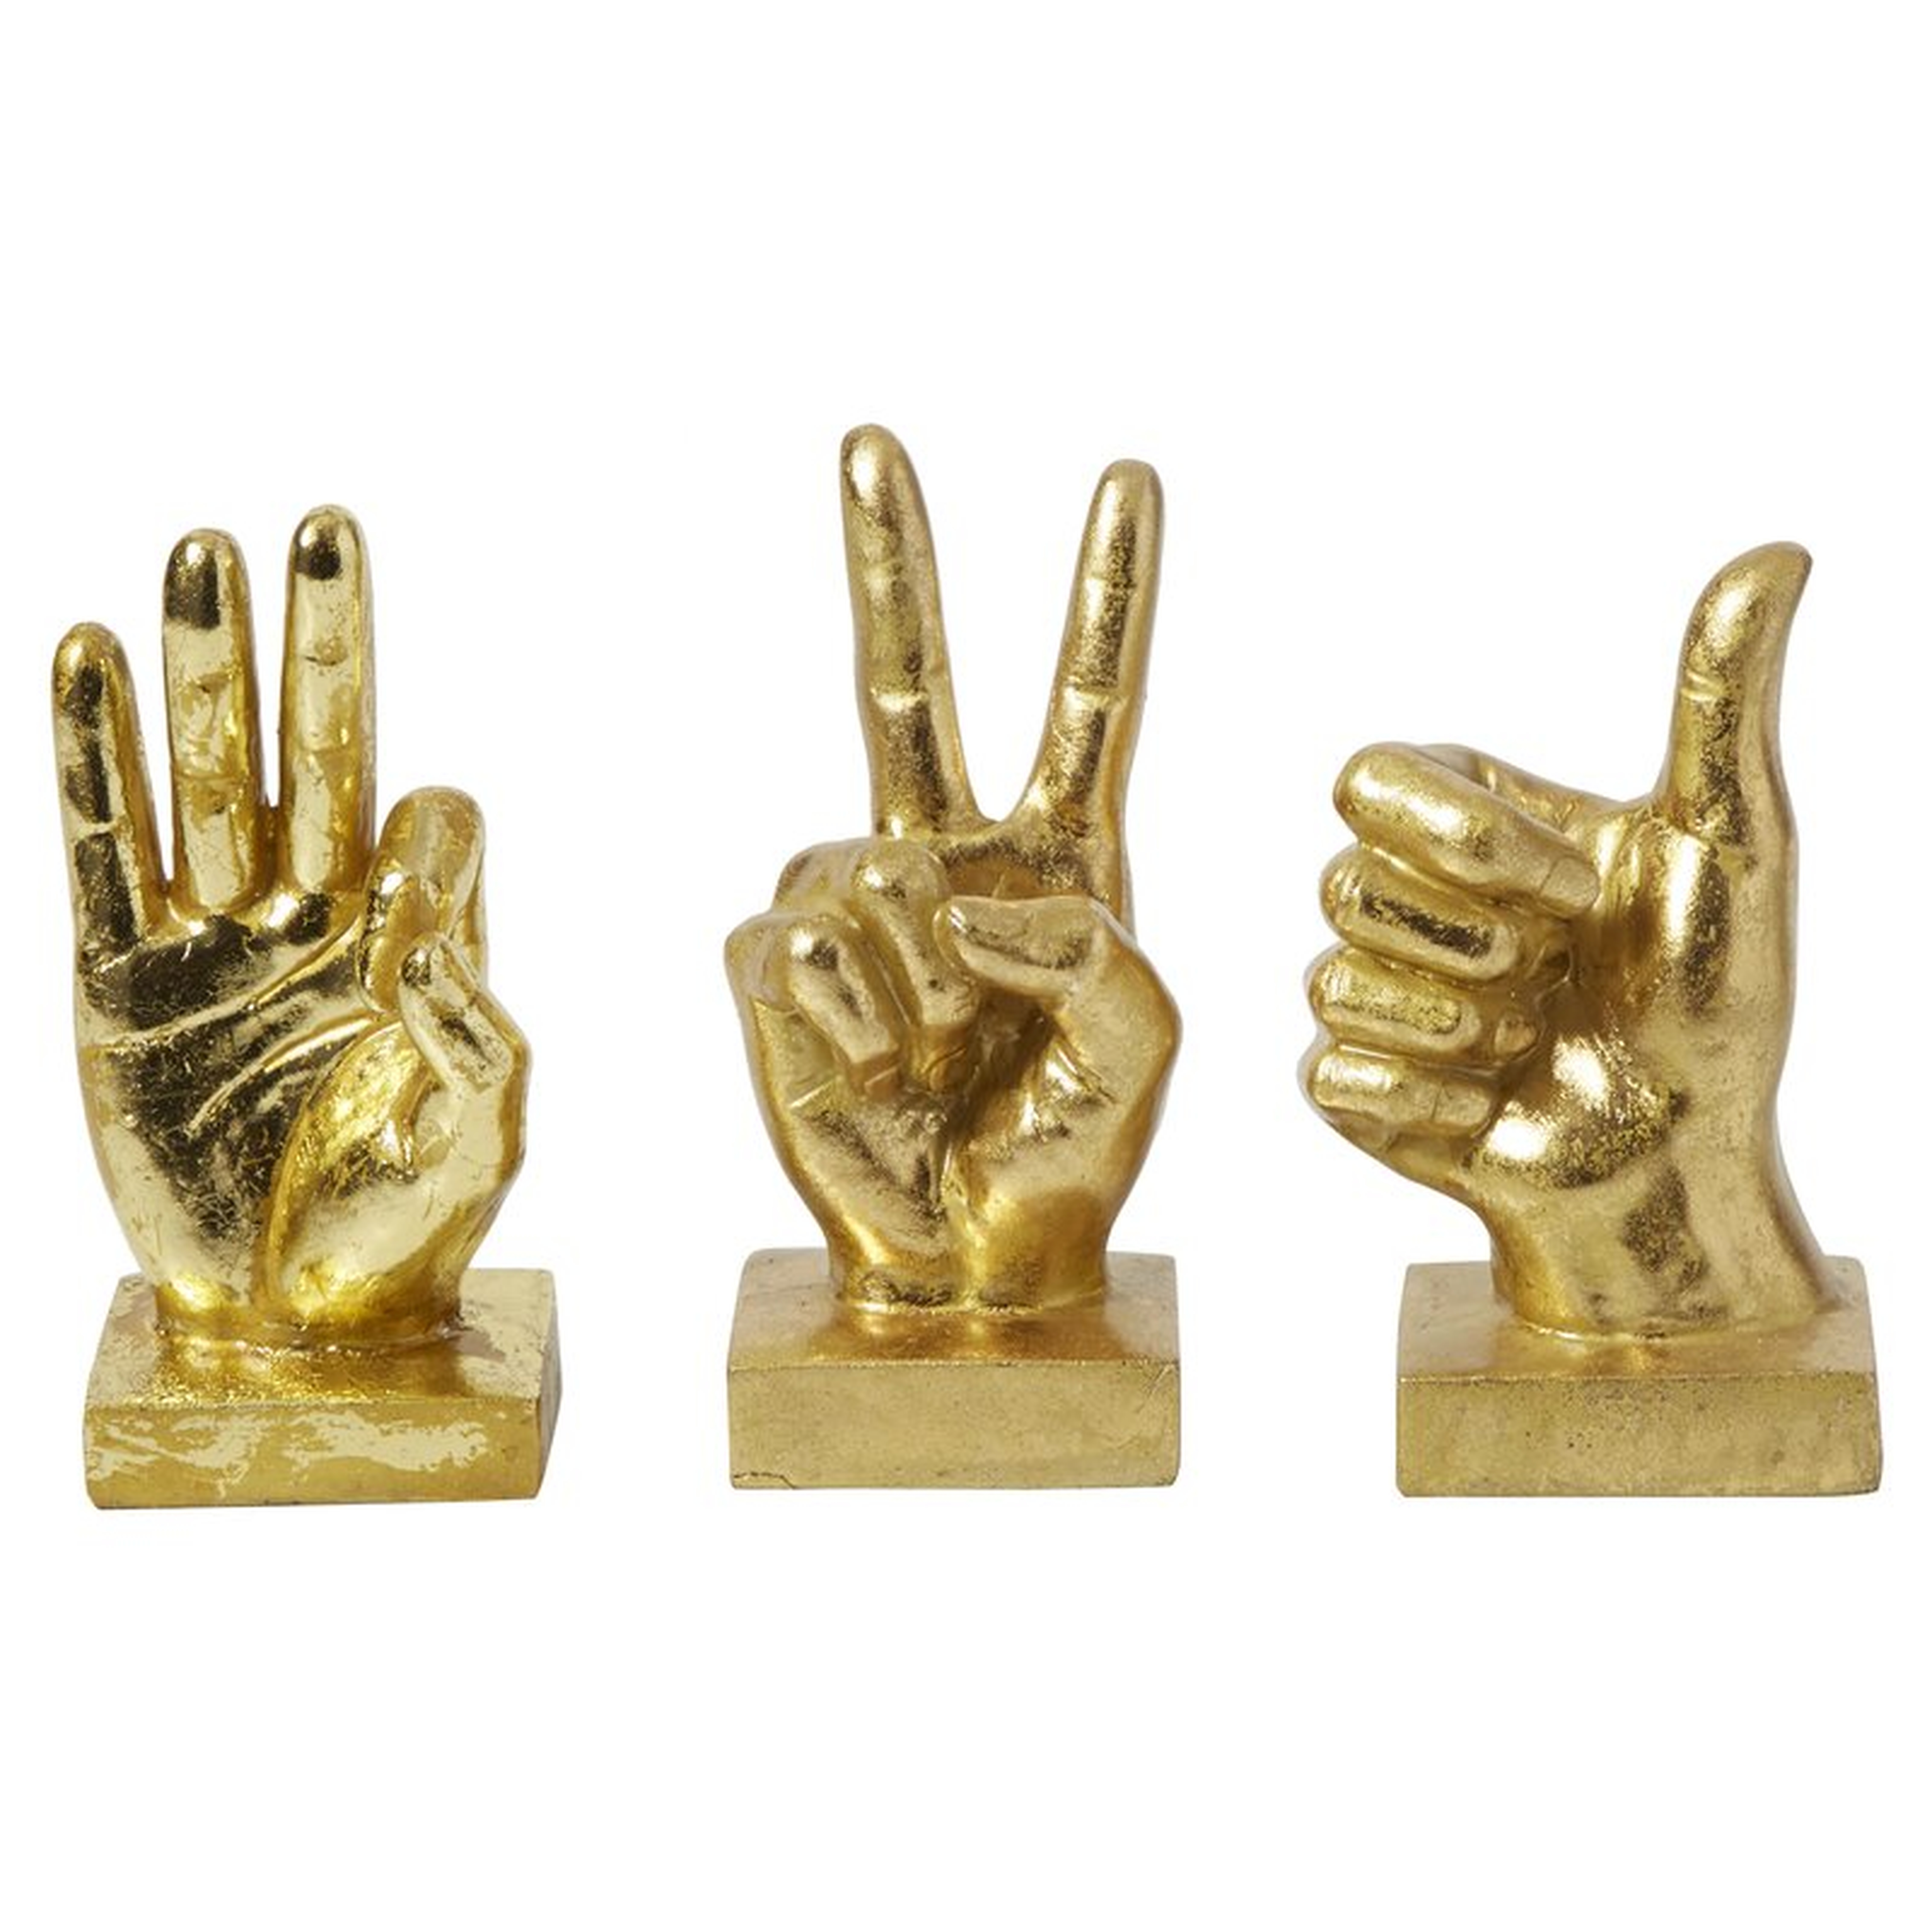 3 Piece Sign Figurine Set - Wayfair